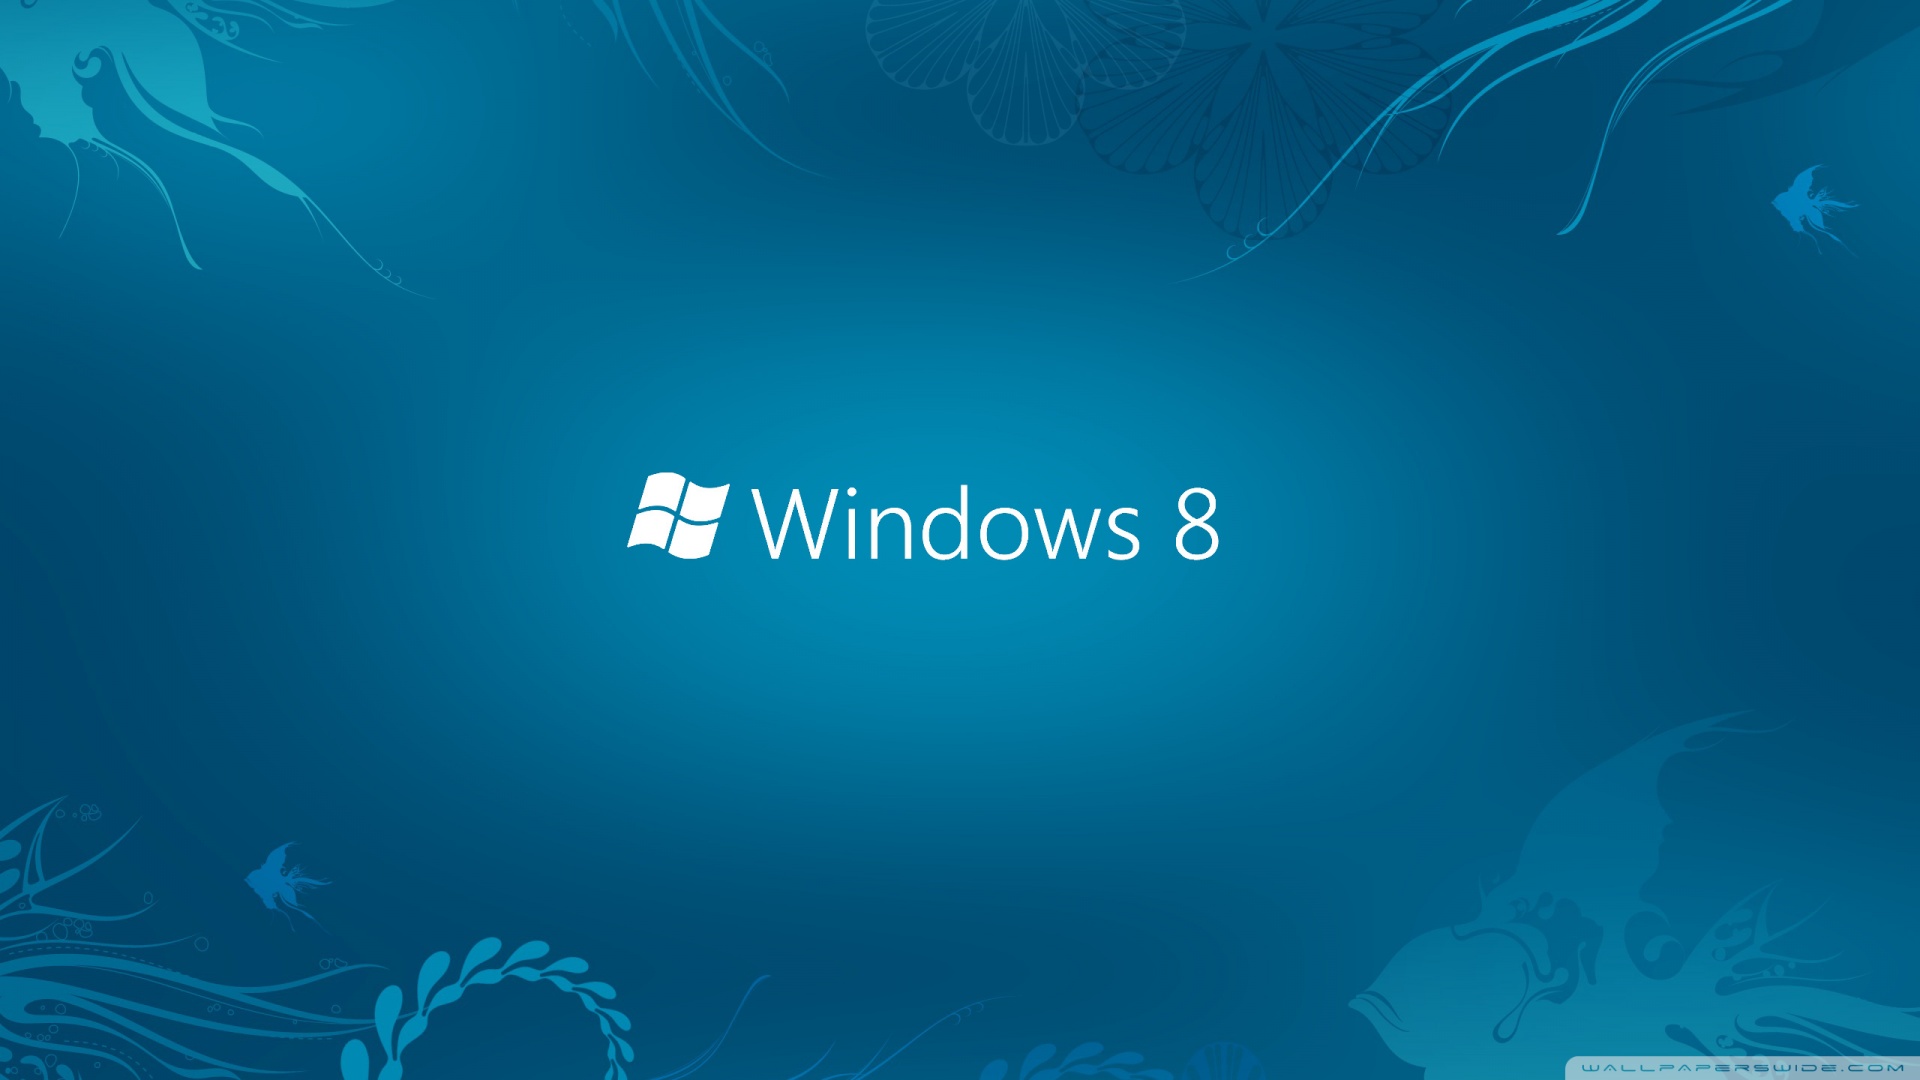 Windows 8 Logo Wallpaper 1920x1080 Windows 8 Blue Wallpaper